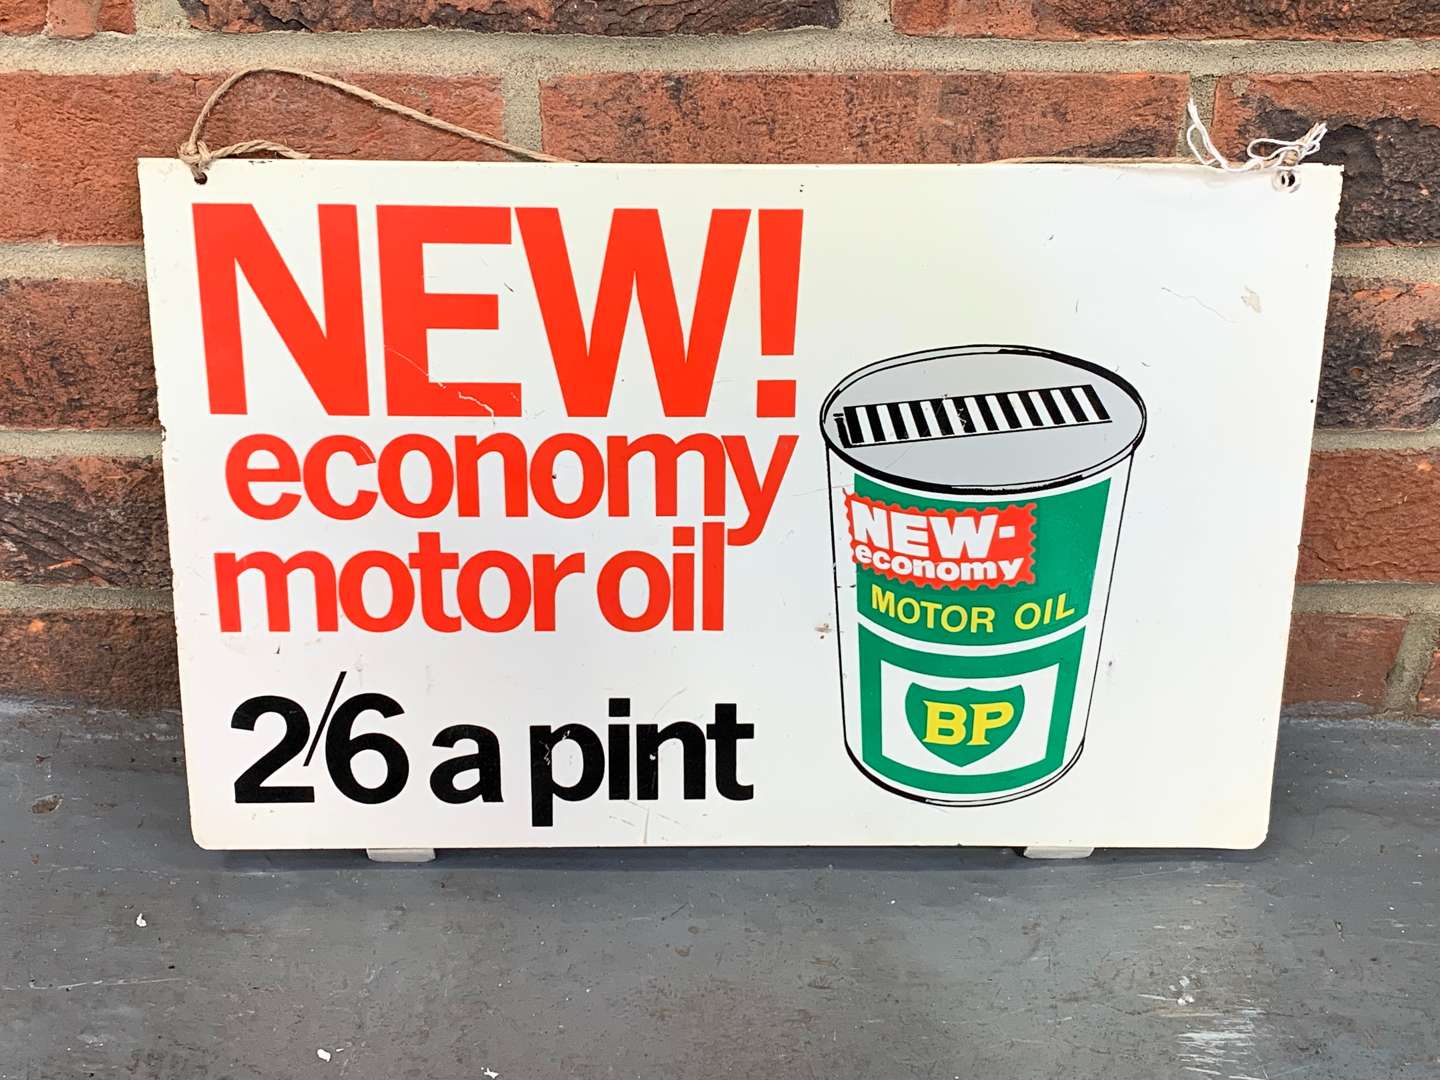 <p>Metal BP Motor Oil New Economy Motor Oil 2'6 A Pint Sign</p>